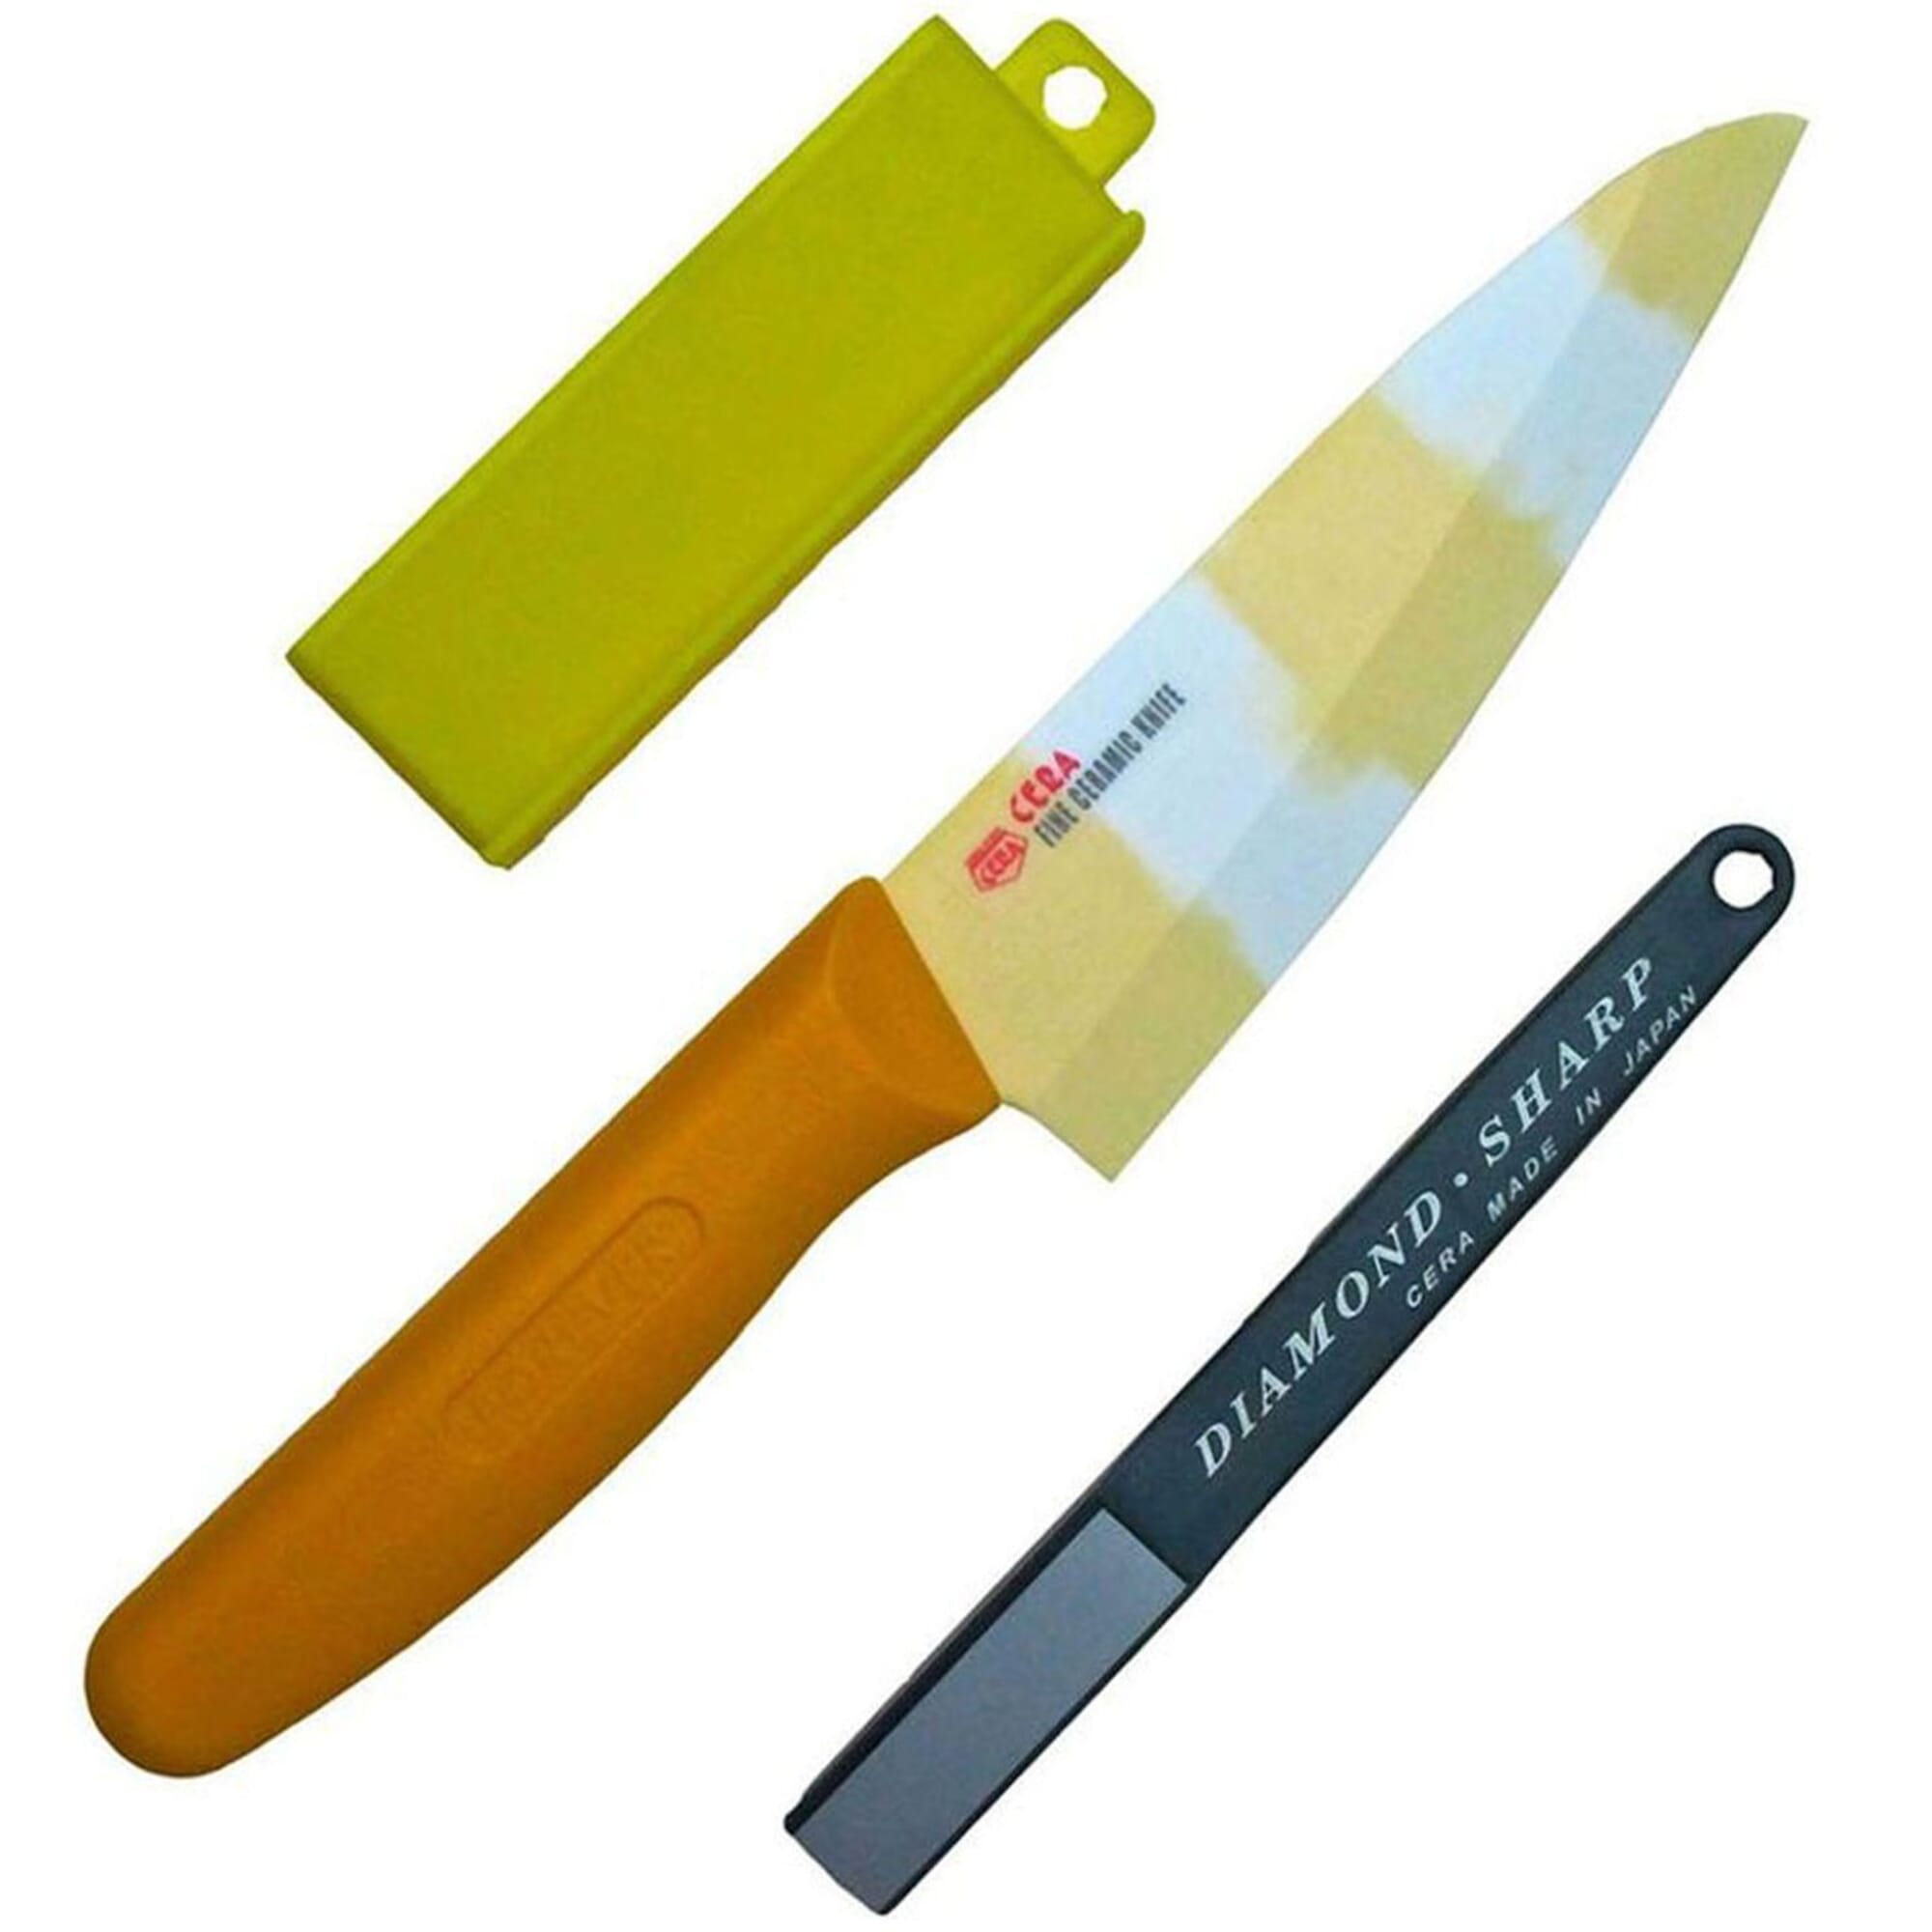 https://goodsjapan.sirv.com/item/images/20115/full/Cera-Forever-Yellow-Ceramic-Kitchen-Knife-14cm---Sharpener-Made-in-Japan----1-.jpg?scale.width=2000&scale.height=2000